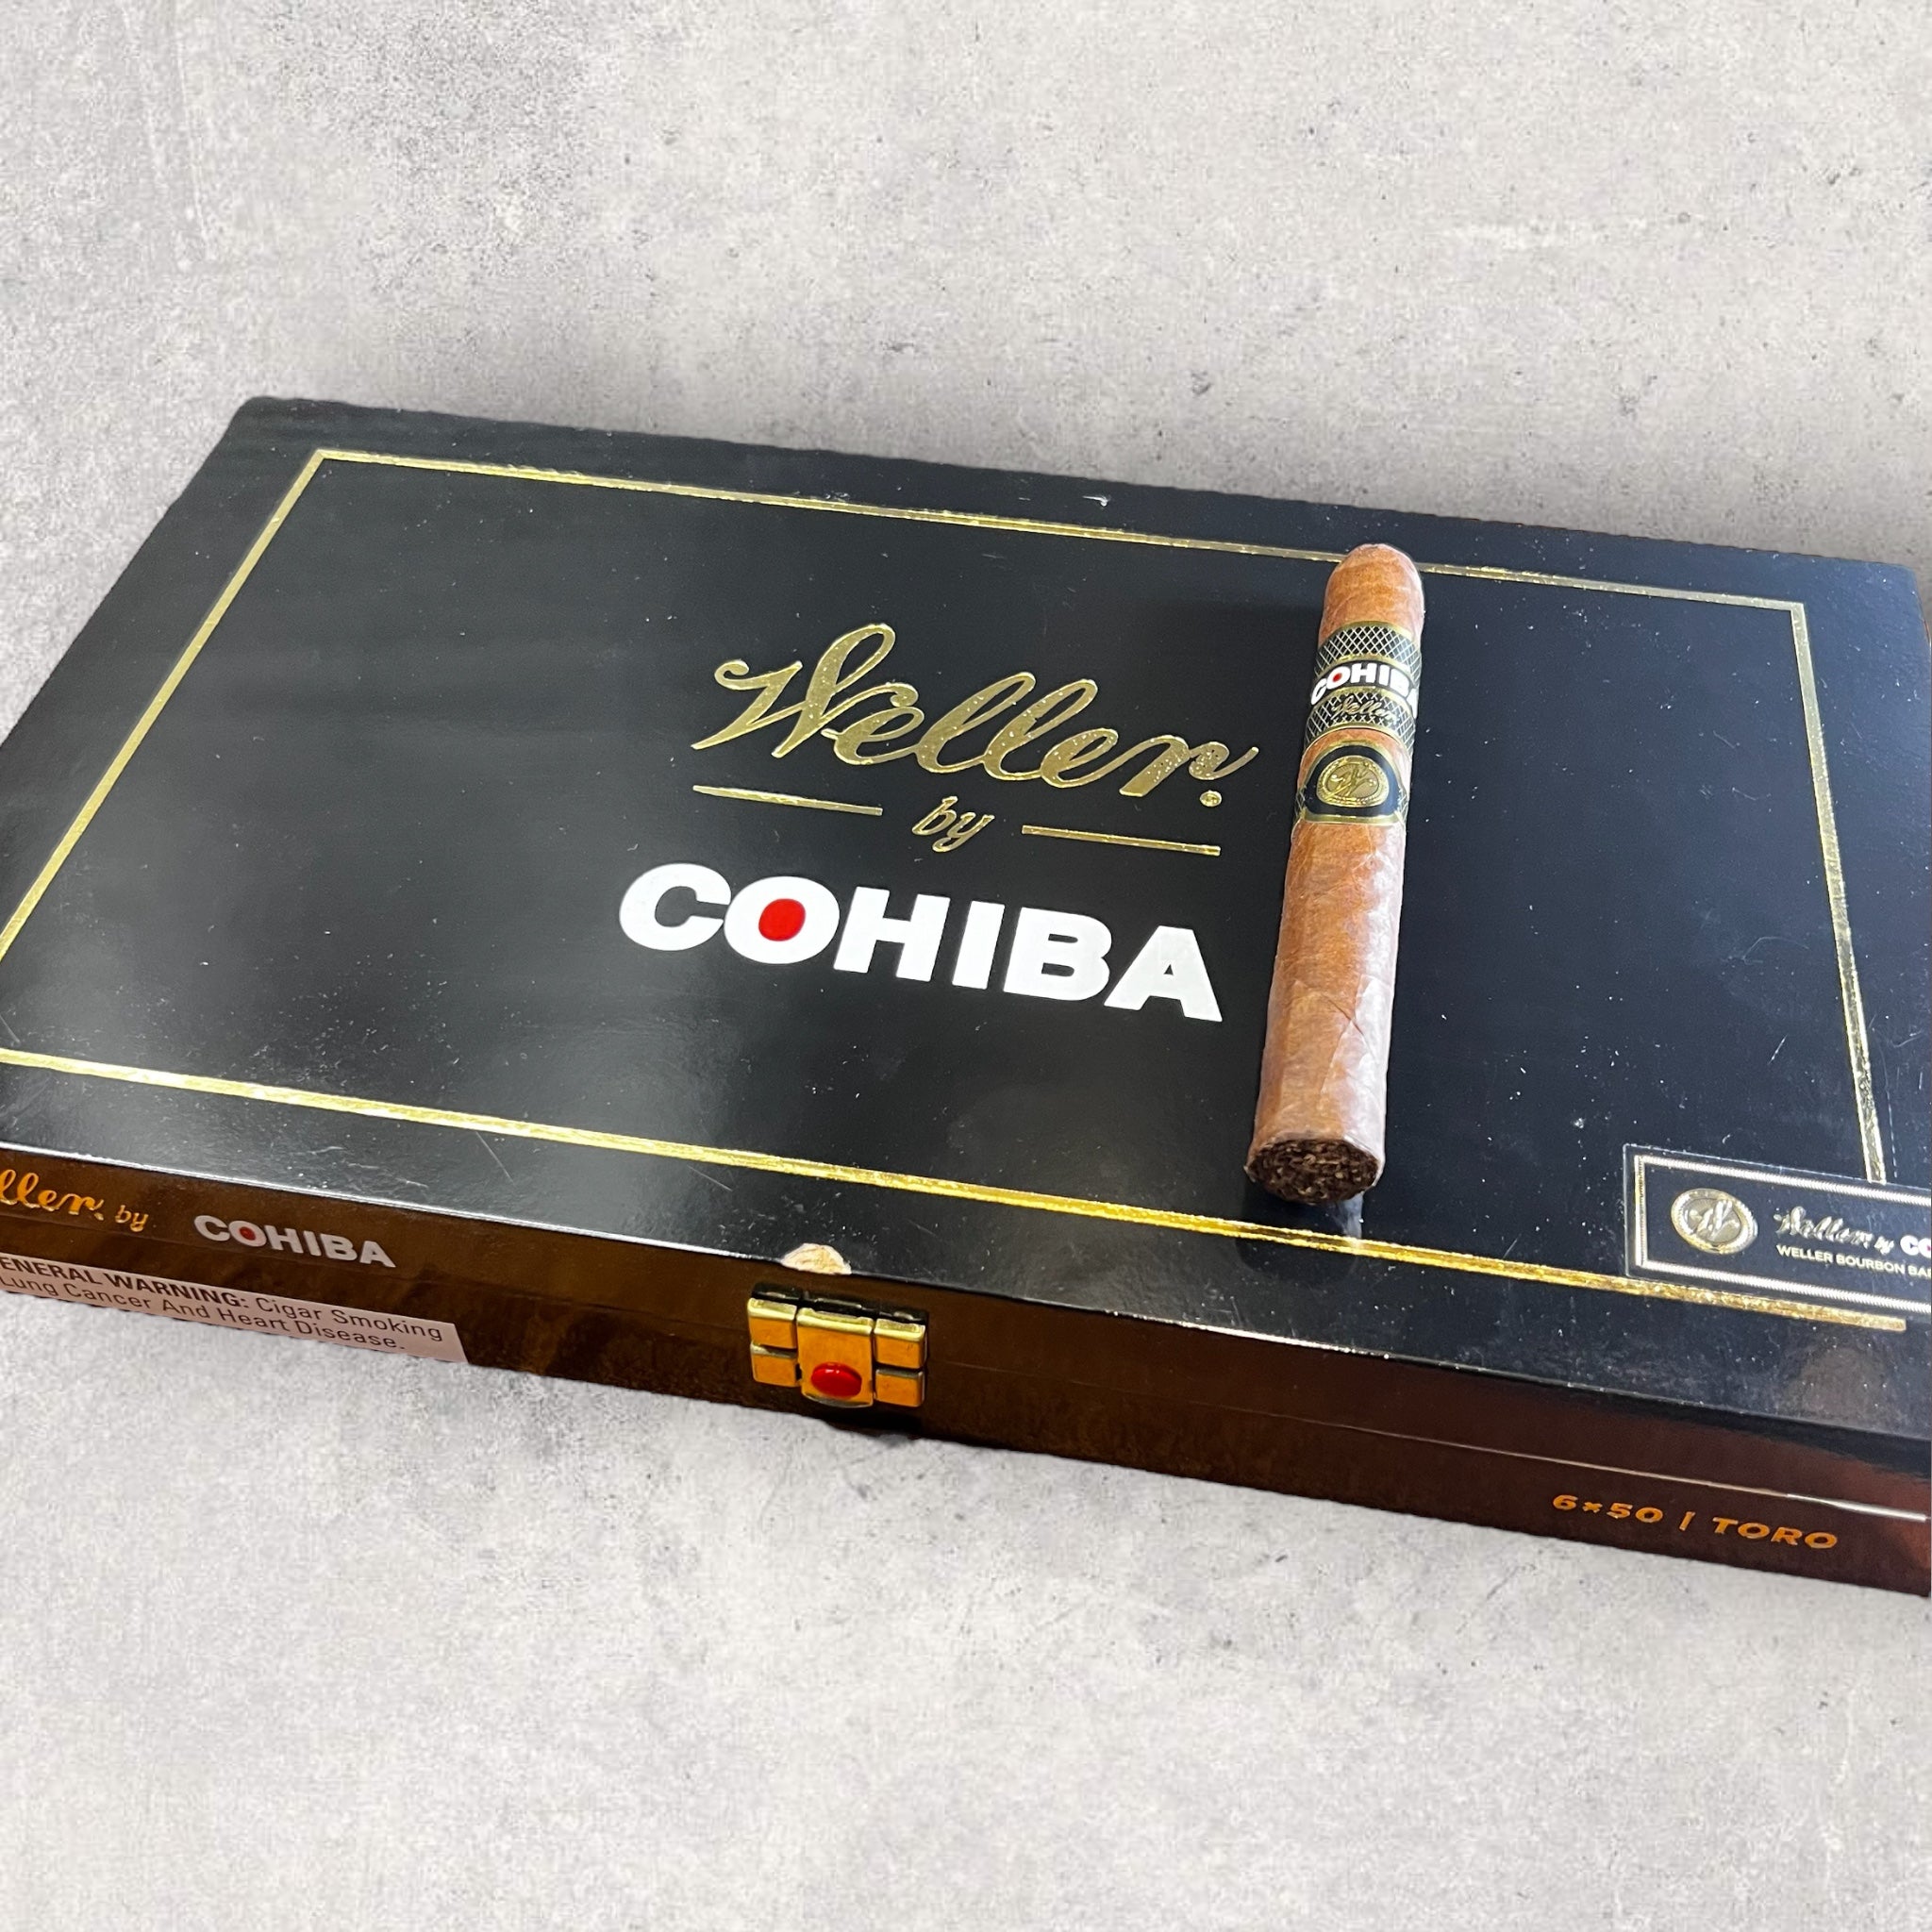 Weller by Cohiba Toro Tubo 2023 - Cigar 30